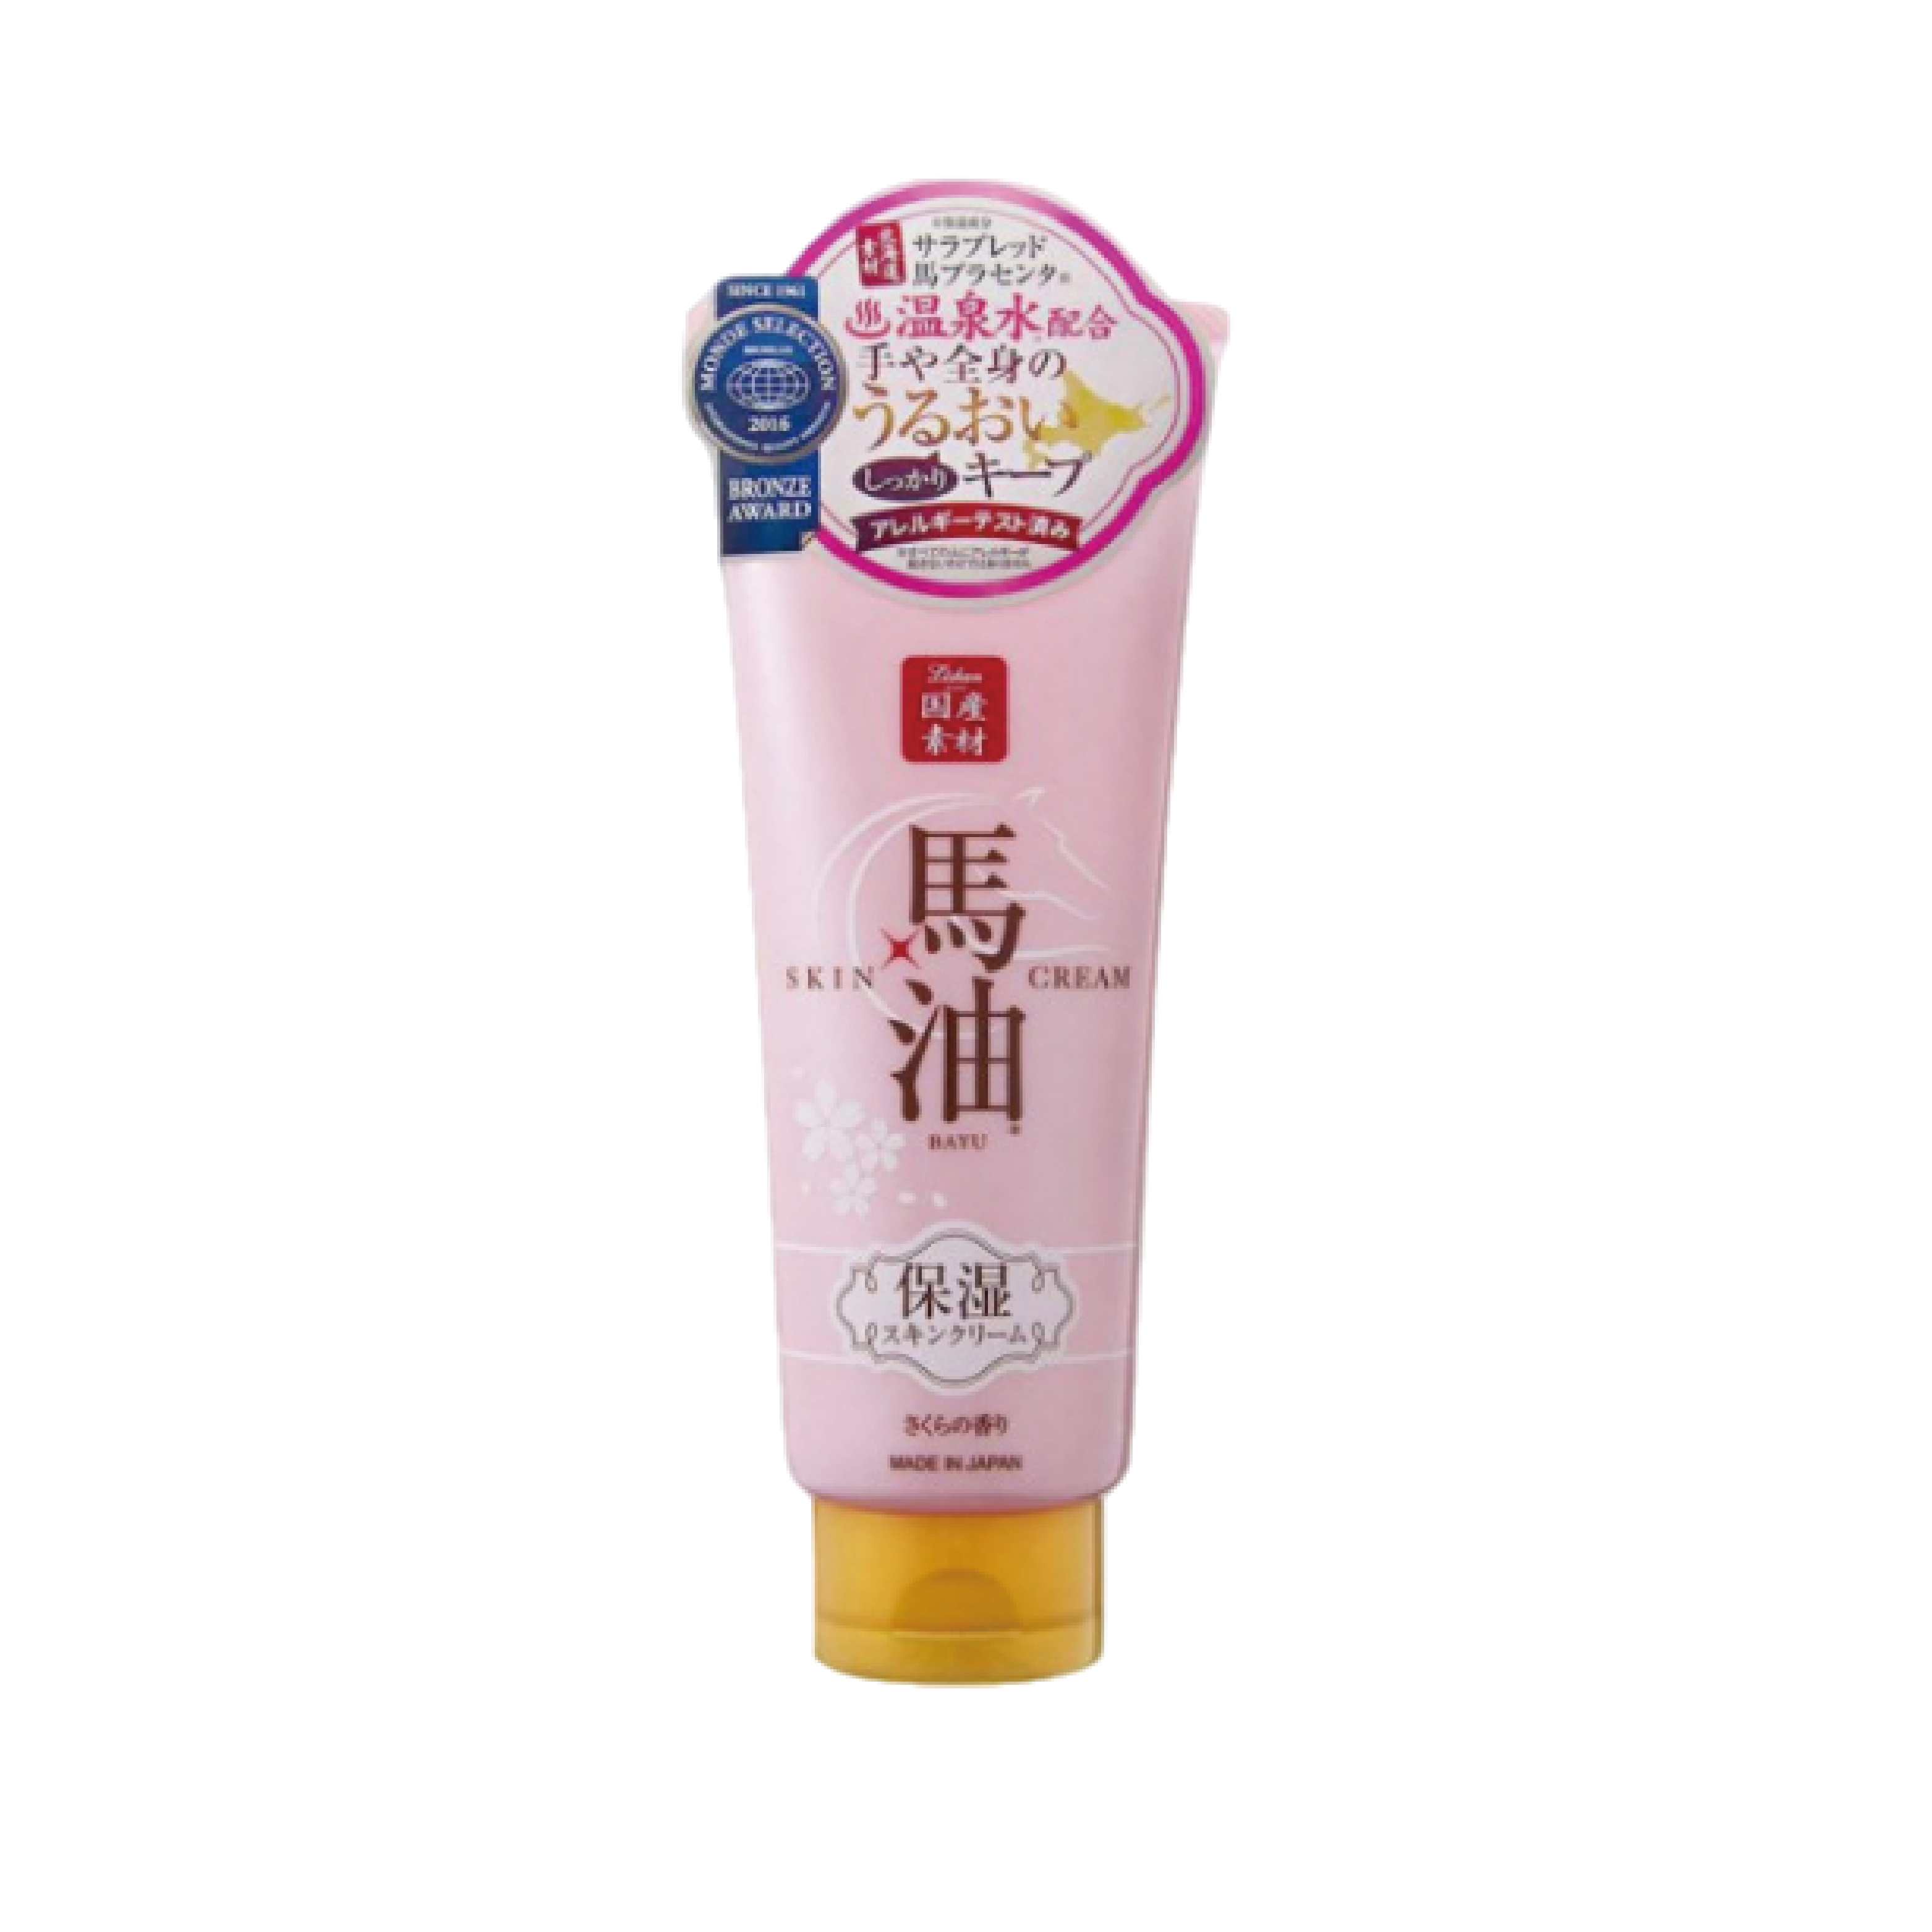 I Style Rishan Horse Oil Skin Cream - Sakura Version...